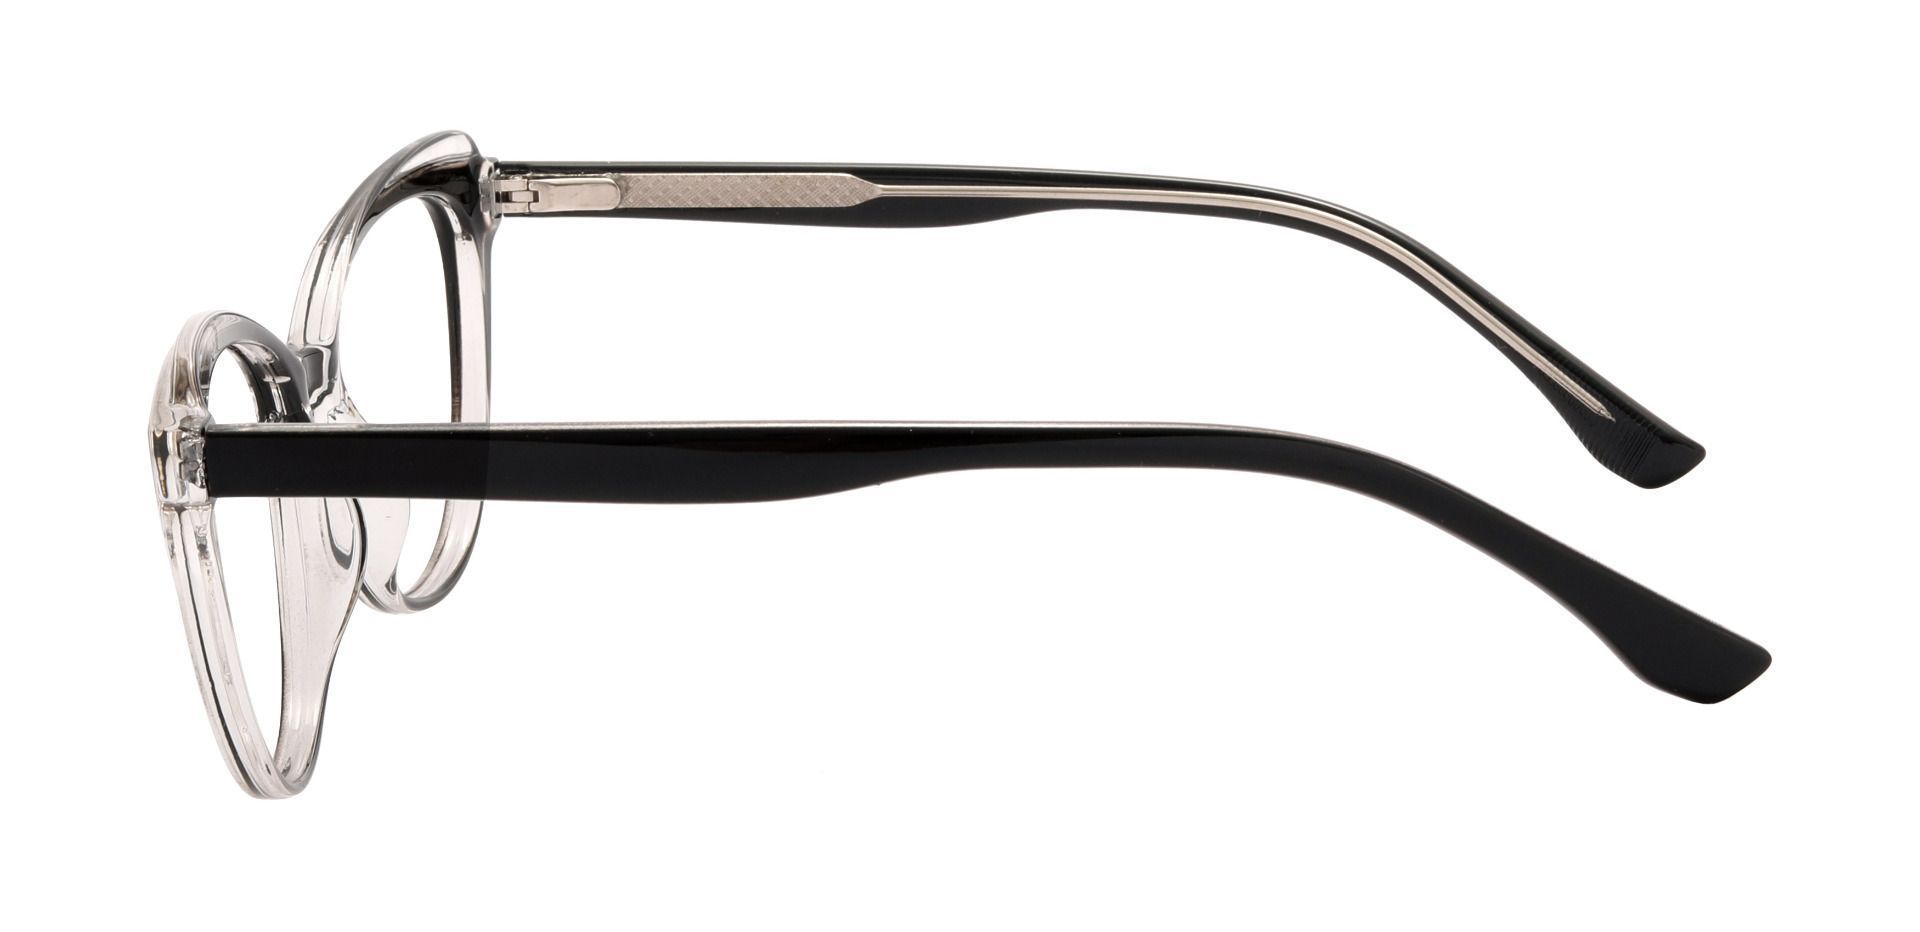 Emilia Cat Eye Prescription Glasses - Black